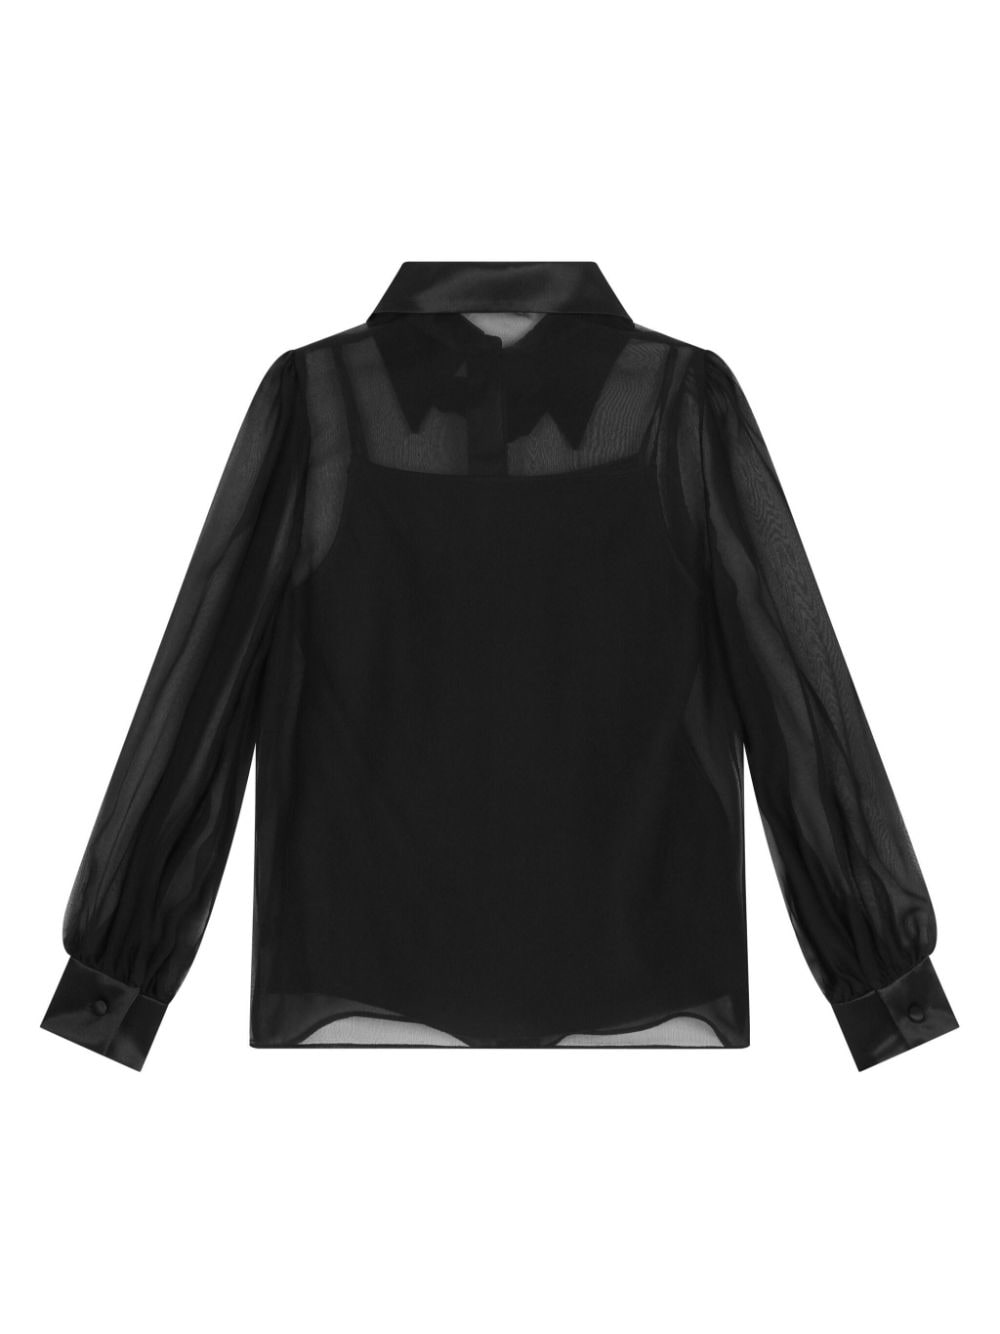 Black silk shirt for girls